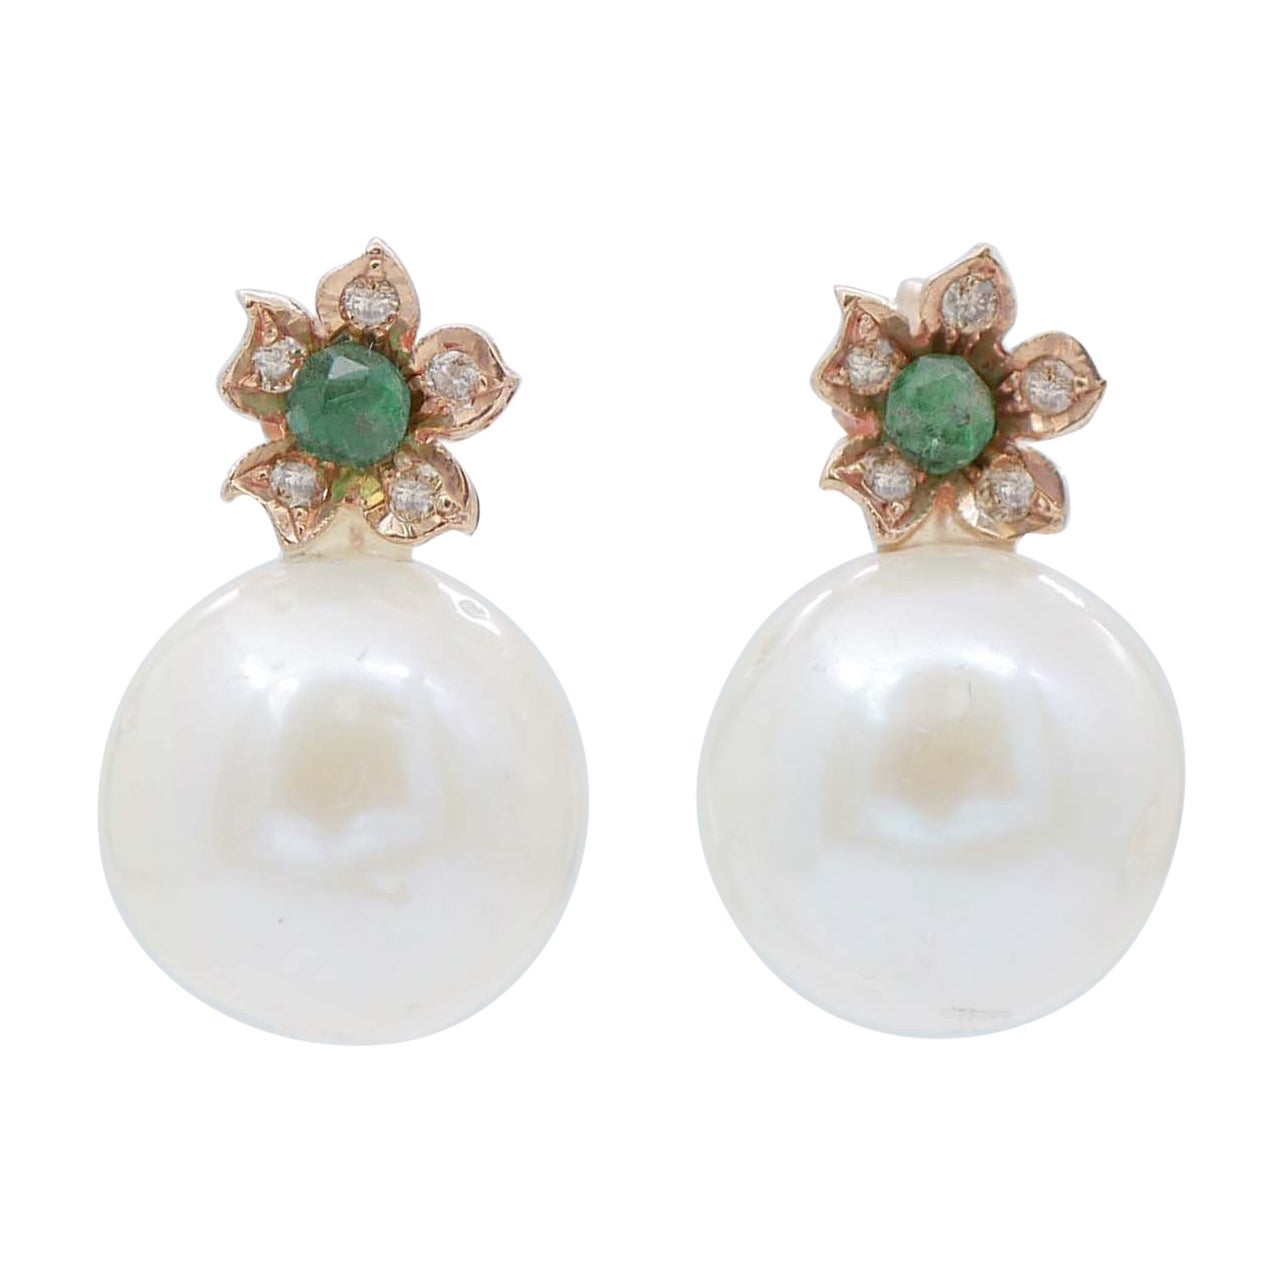 Emeralds, Diamonds, Pearls, Rose Gold Earrings